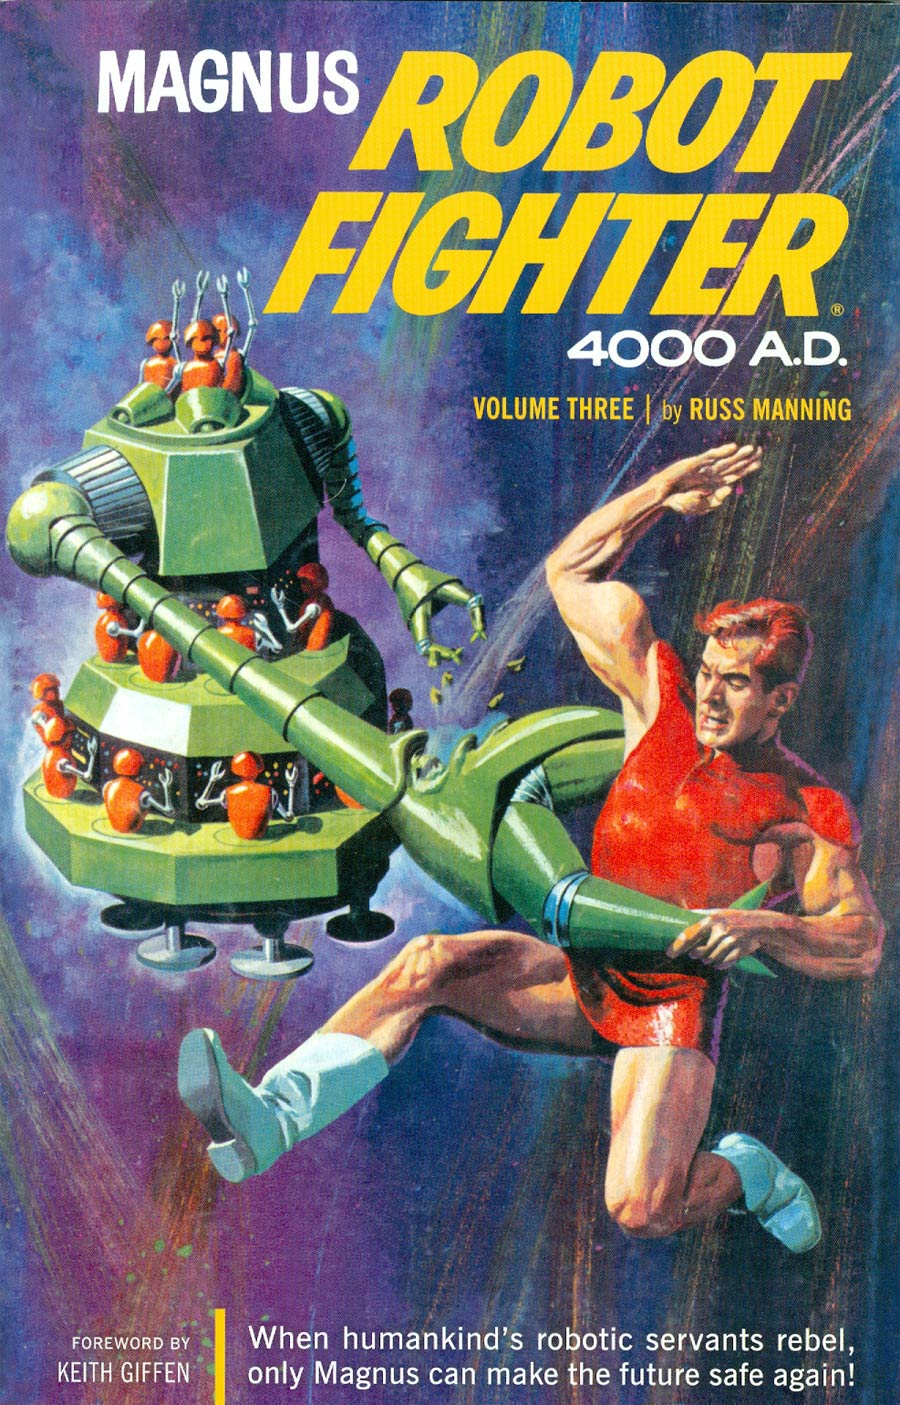 Magnus Robot Fighter 4000 AD Vol 3 TP